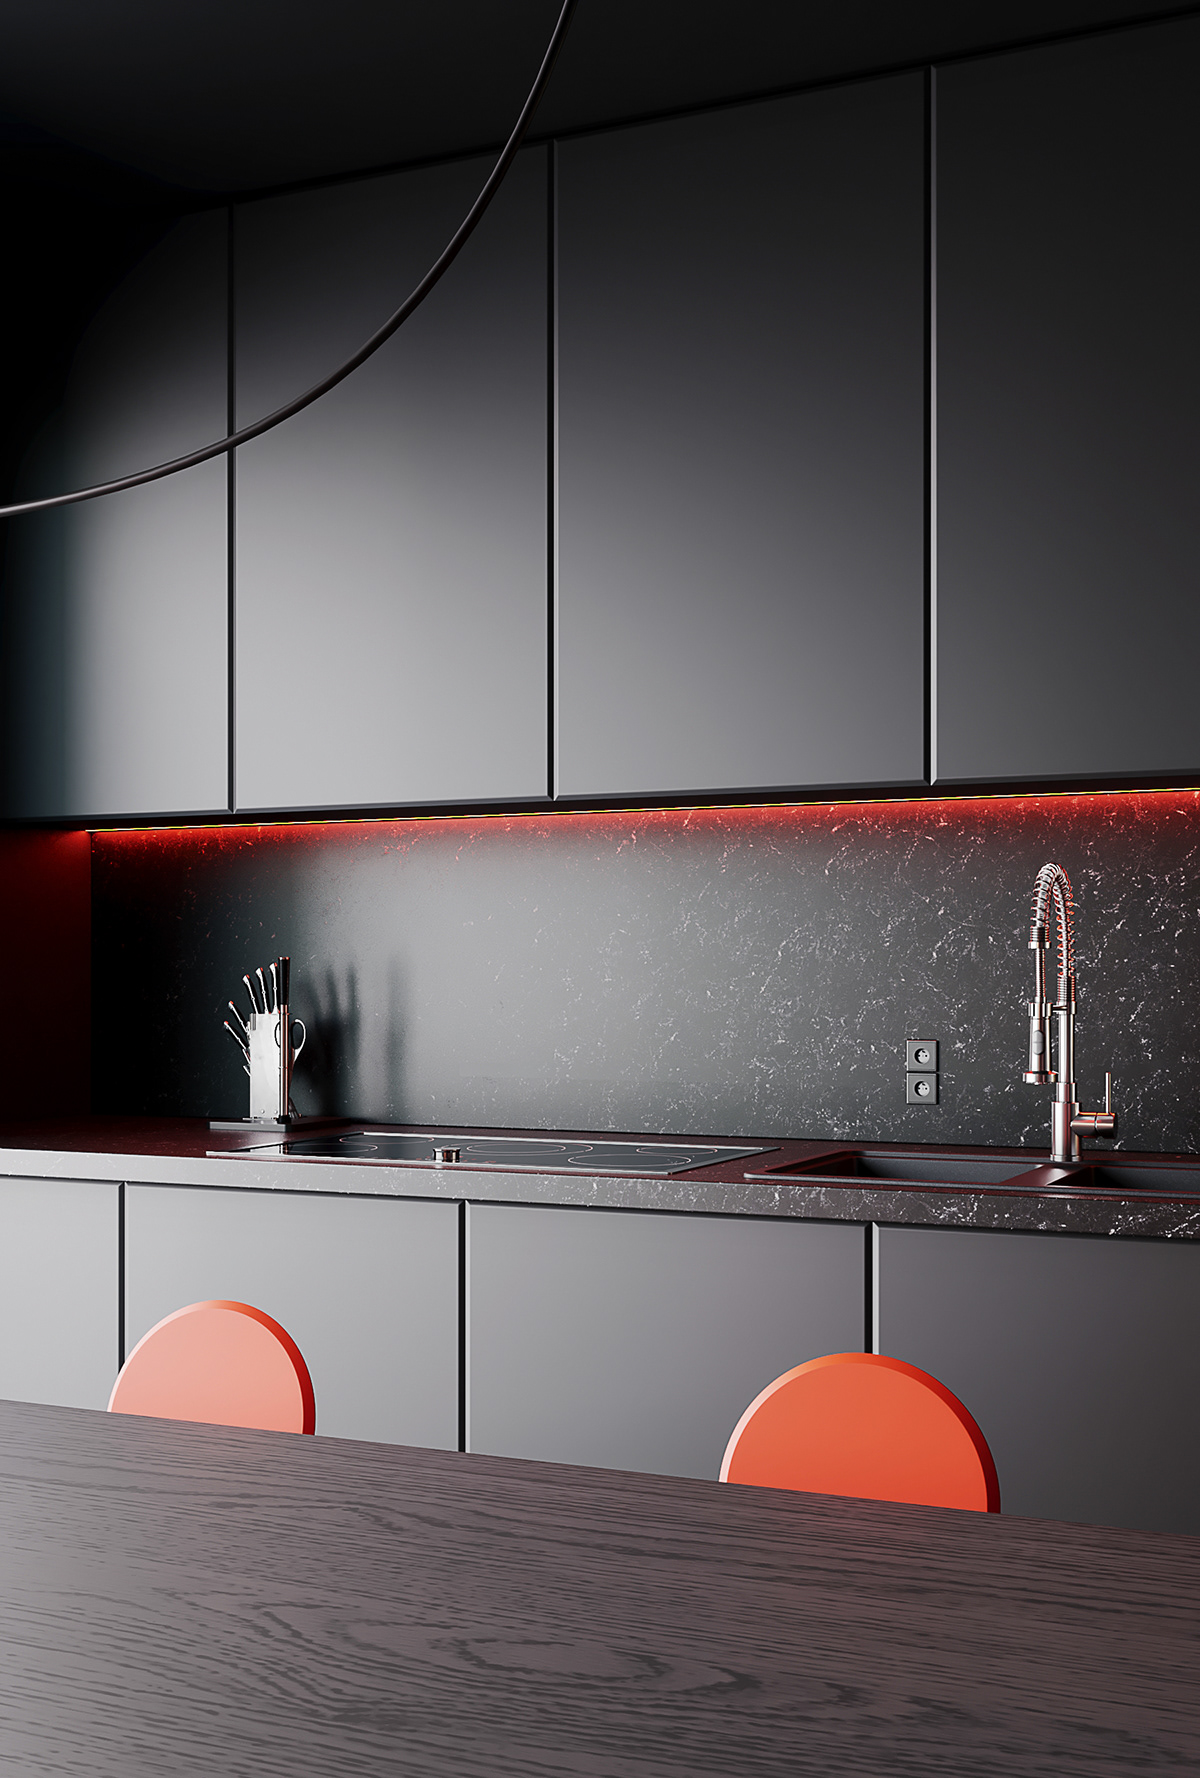  Black kitchen - CGI